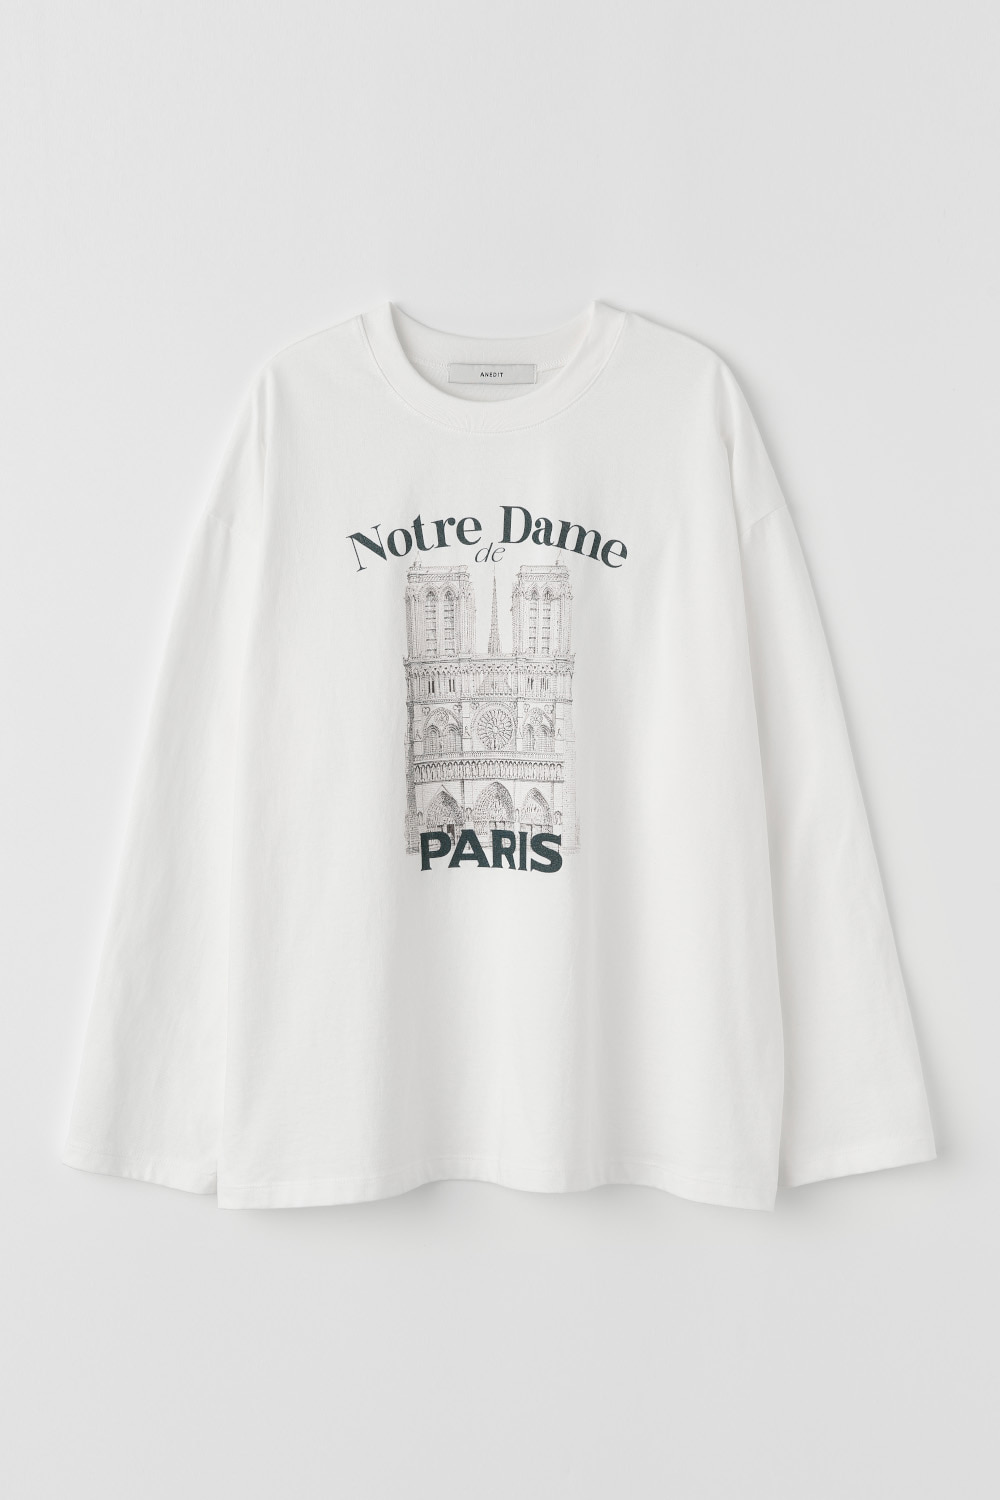 Notre Dame Long Sleeve Tshirt_White